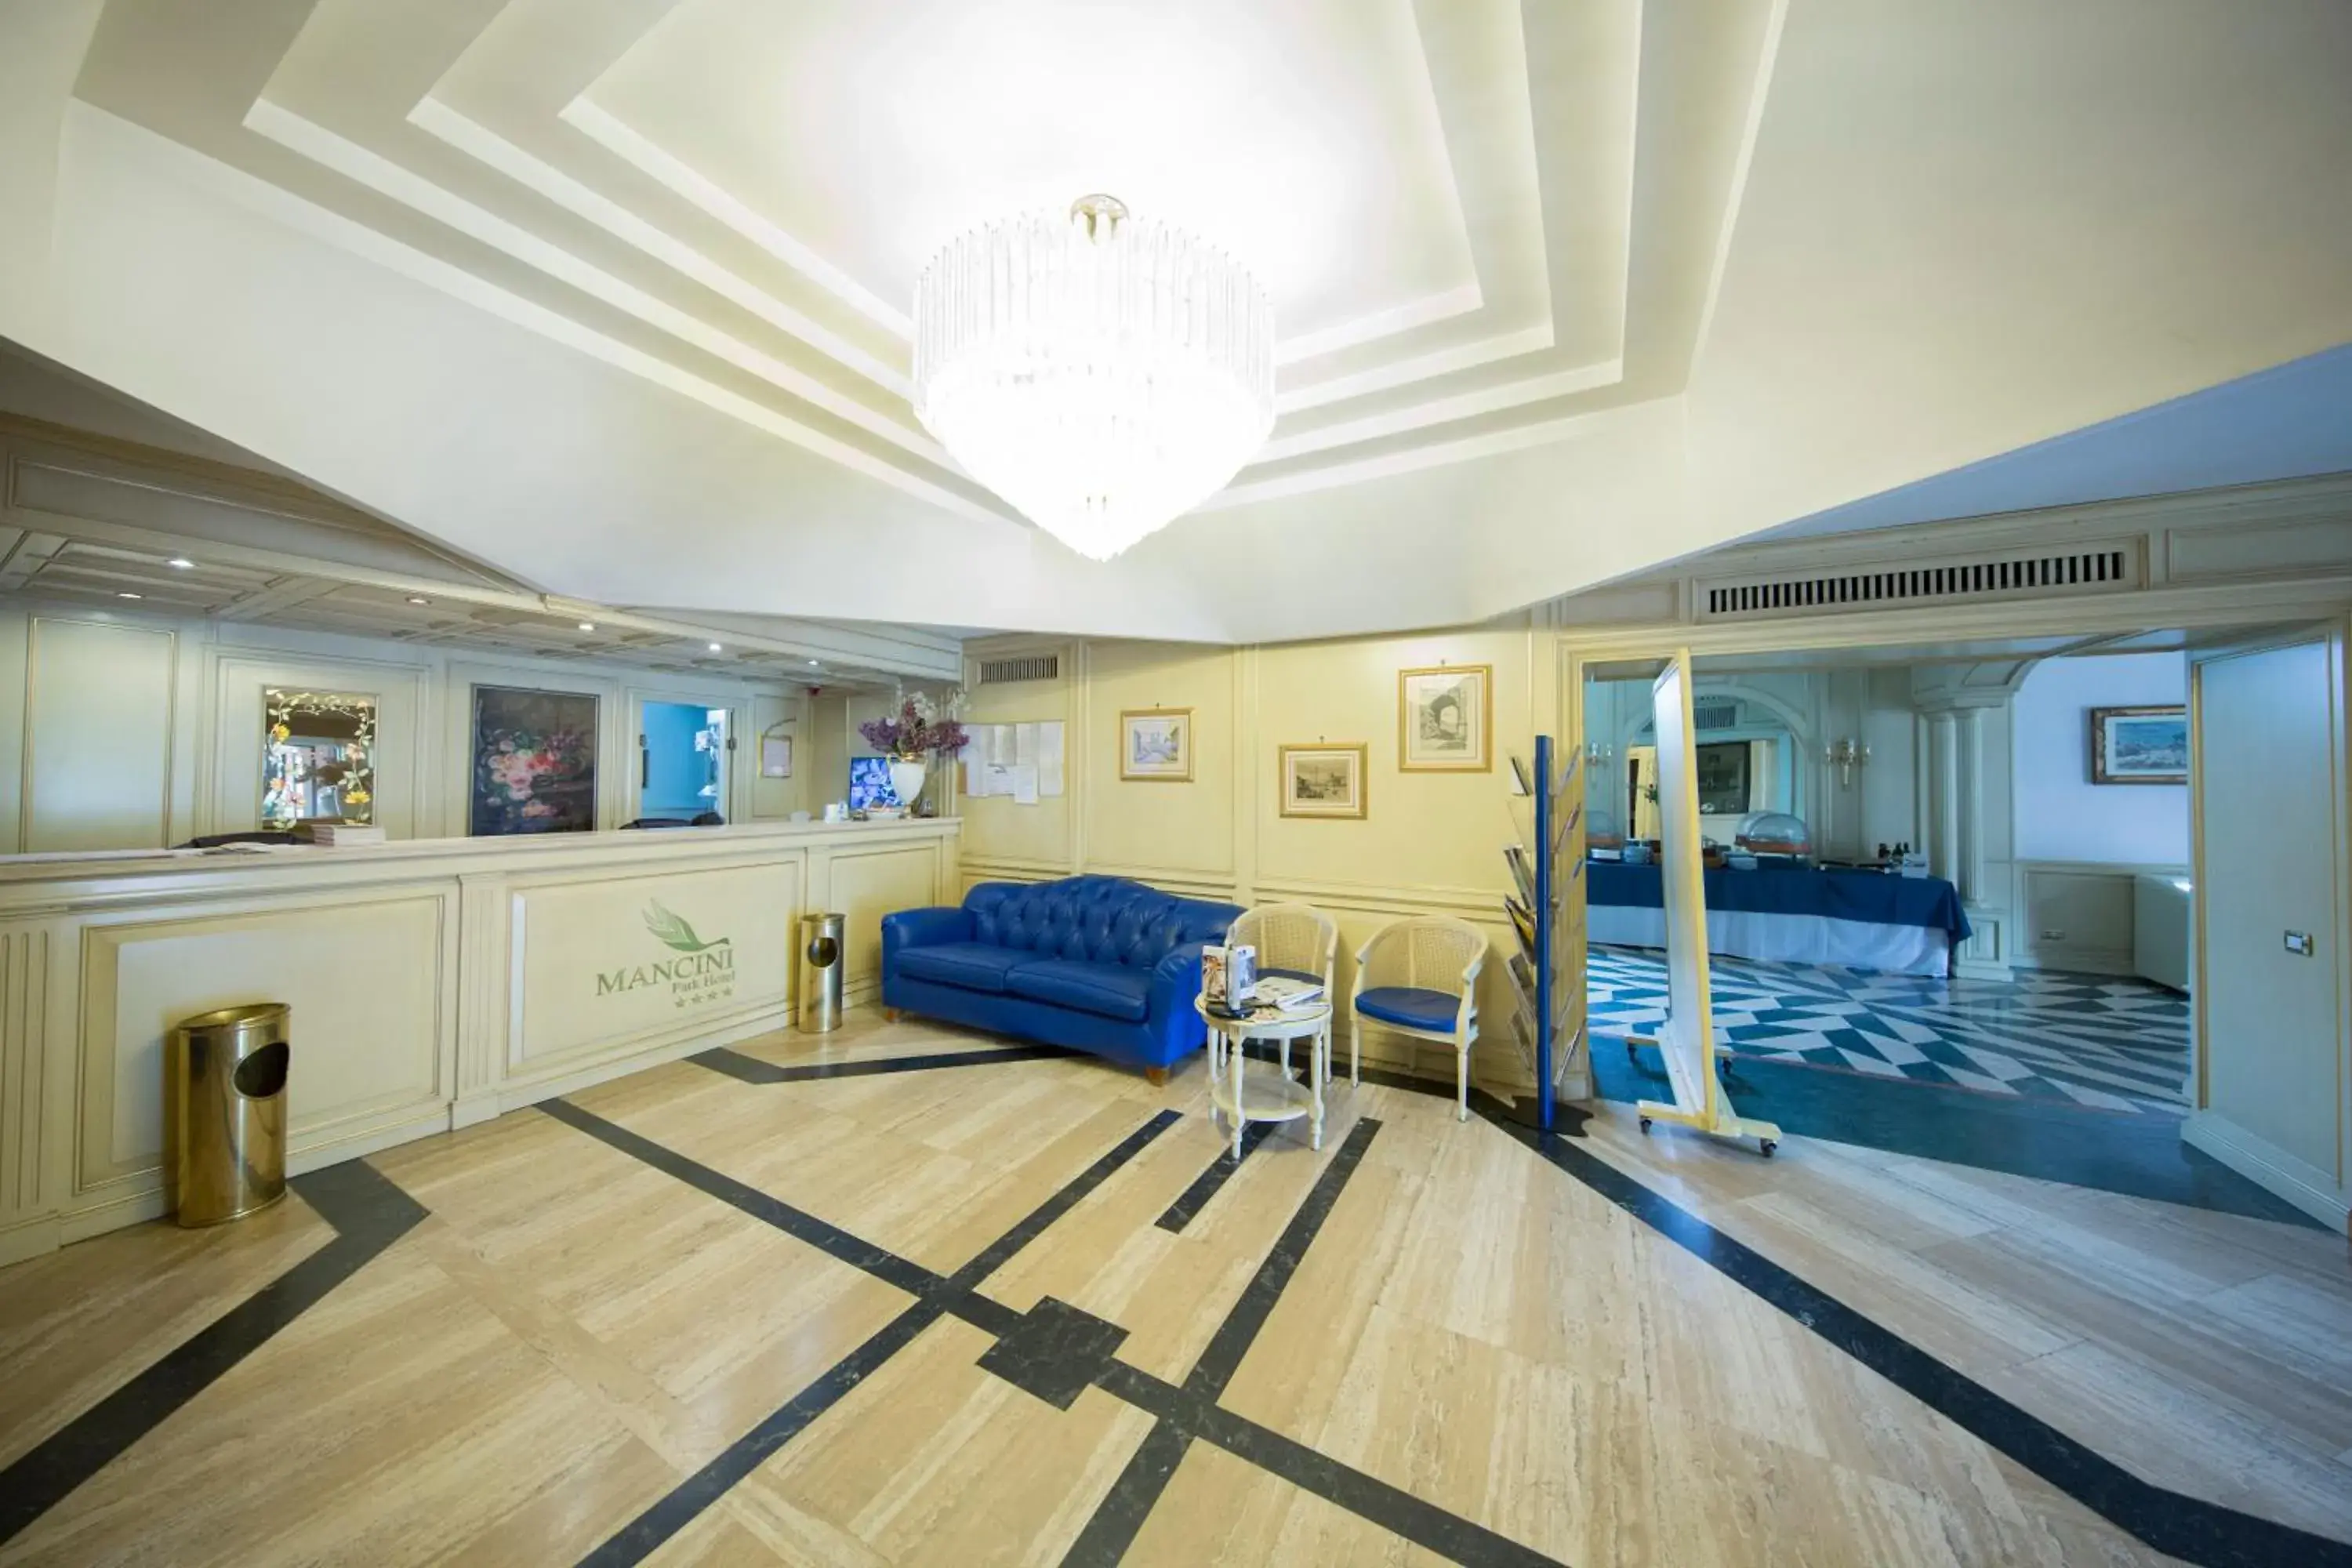 Lobby or reception in Mancini Park Hotel